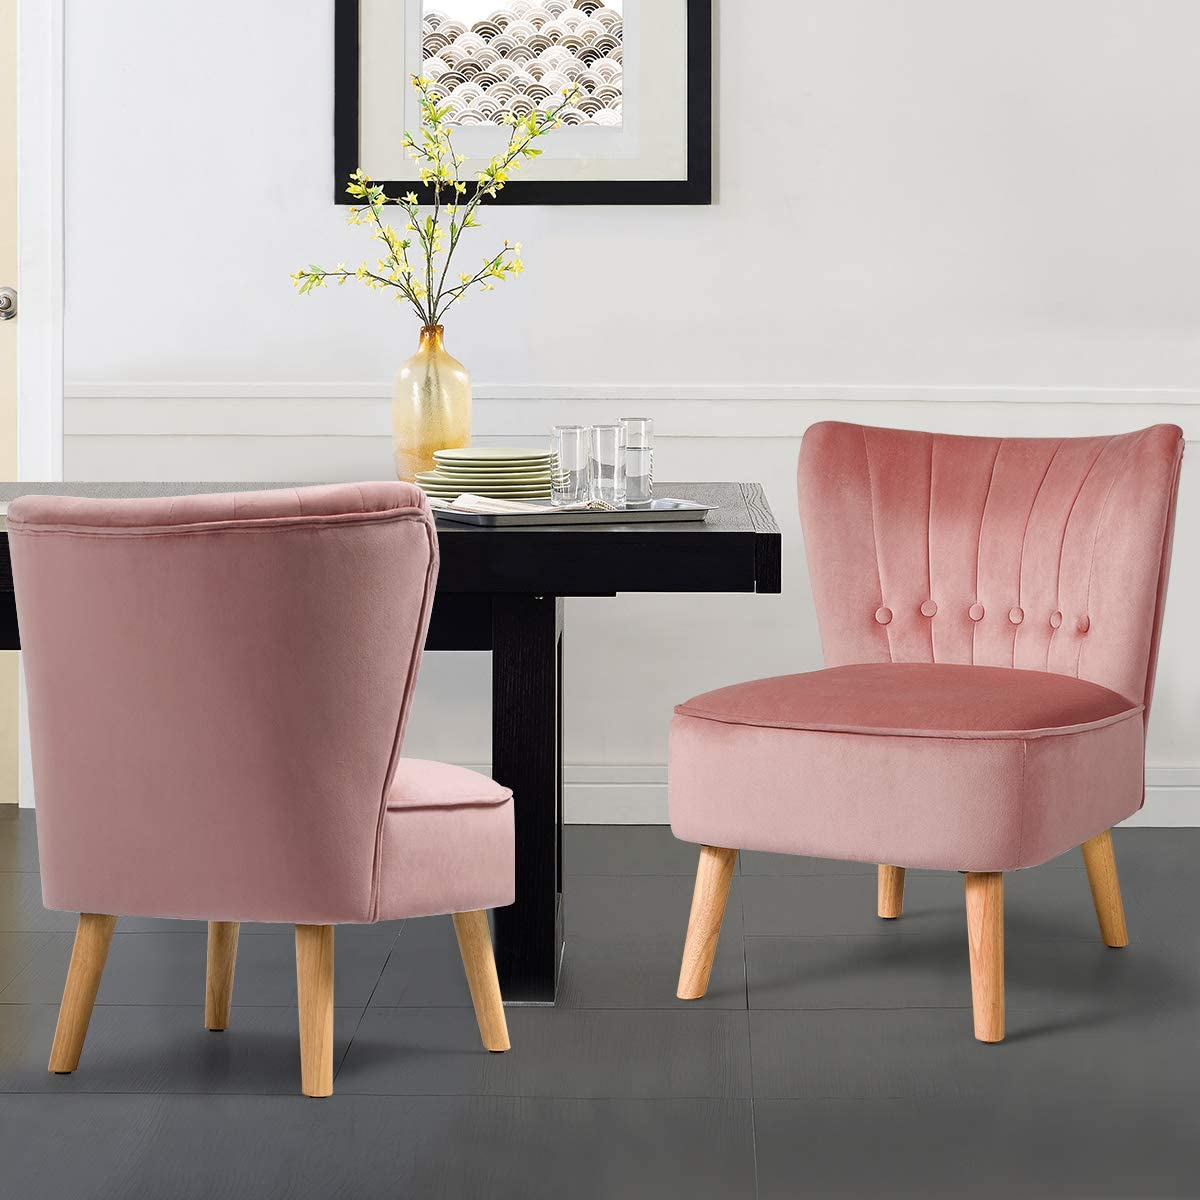 Giantex Small Upholstered Leisure Sofa Chair w/Wood Legs (2)